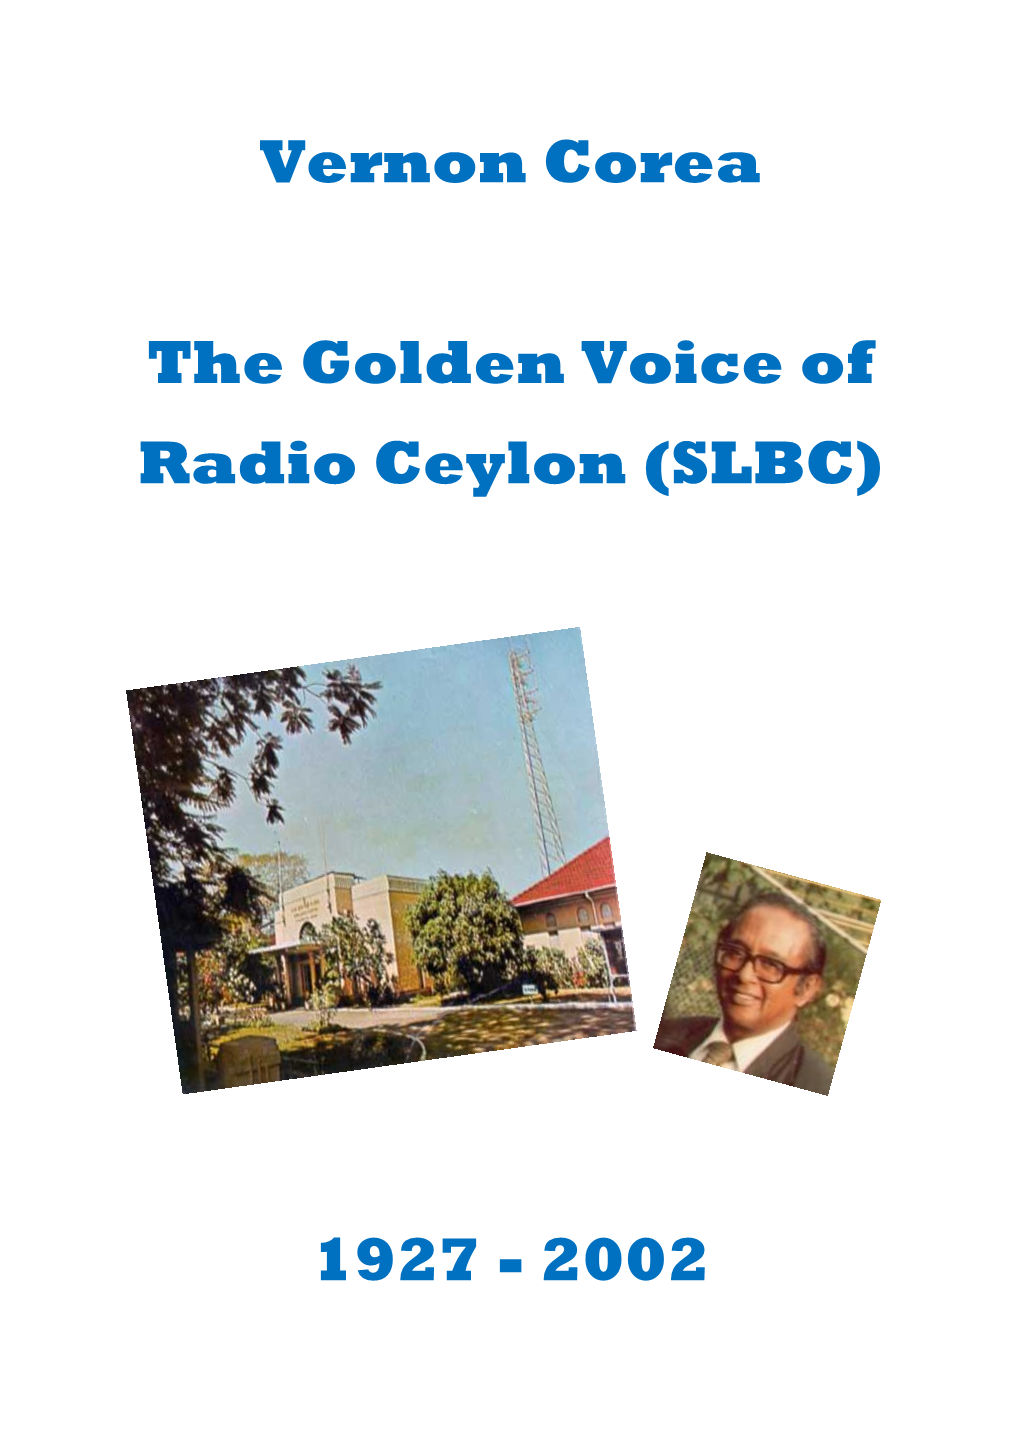 Vernon Corea the Golden Voice of Radio Ceylon (SLBC) 1927